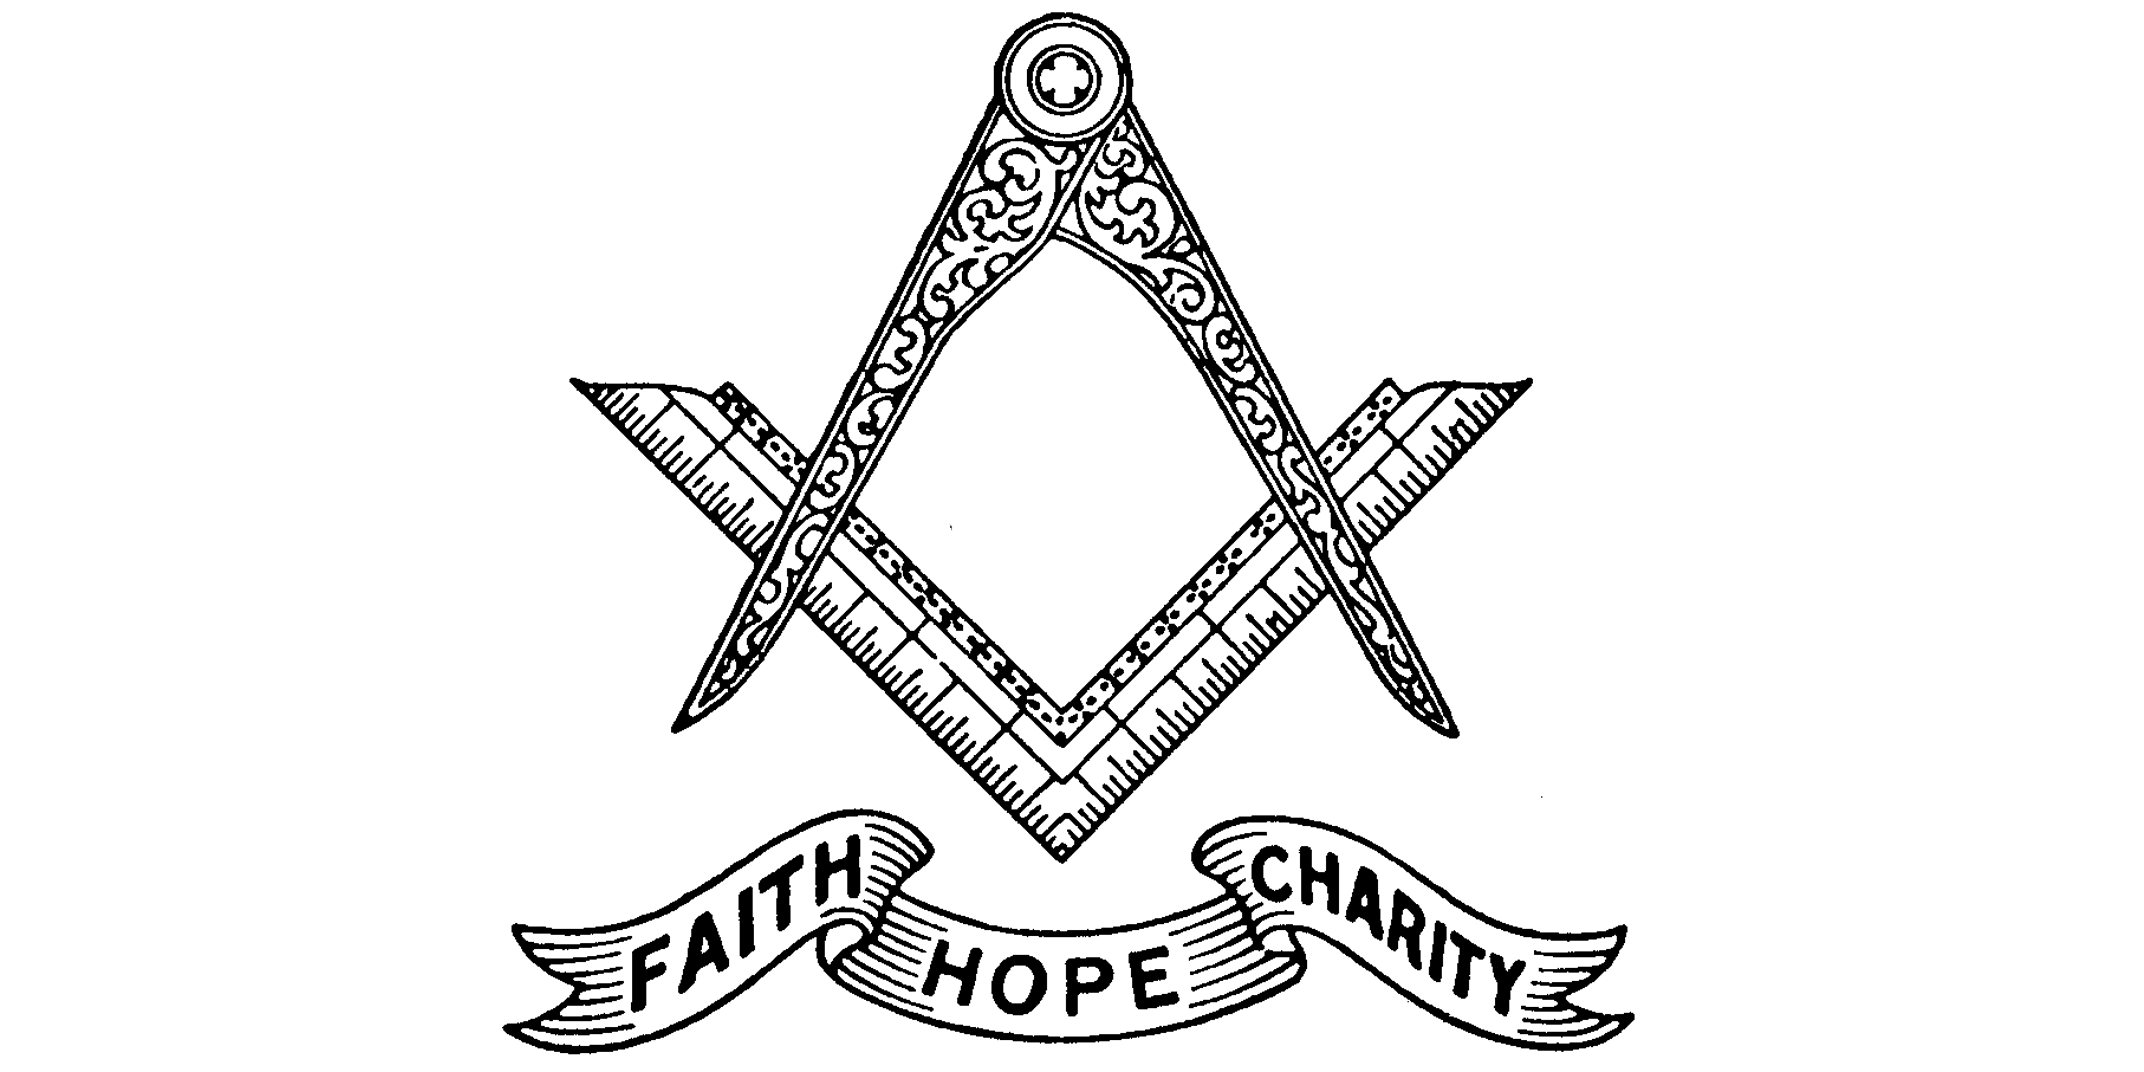 Logo of Faith, Hope and Charity - Synonymous with Freemasonry